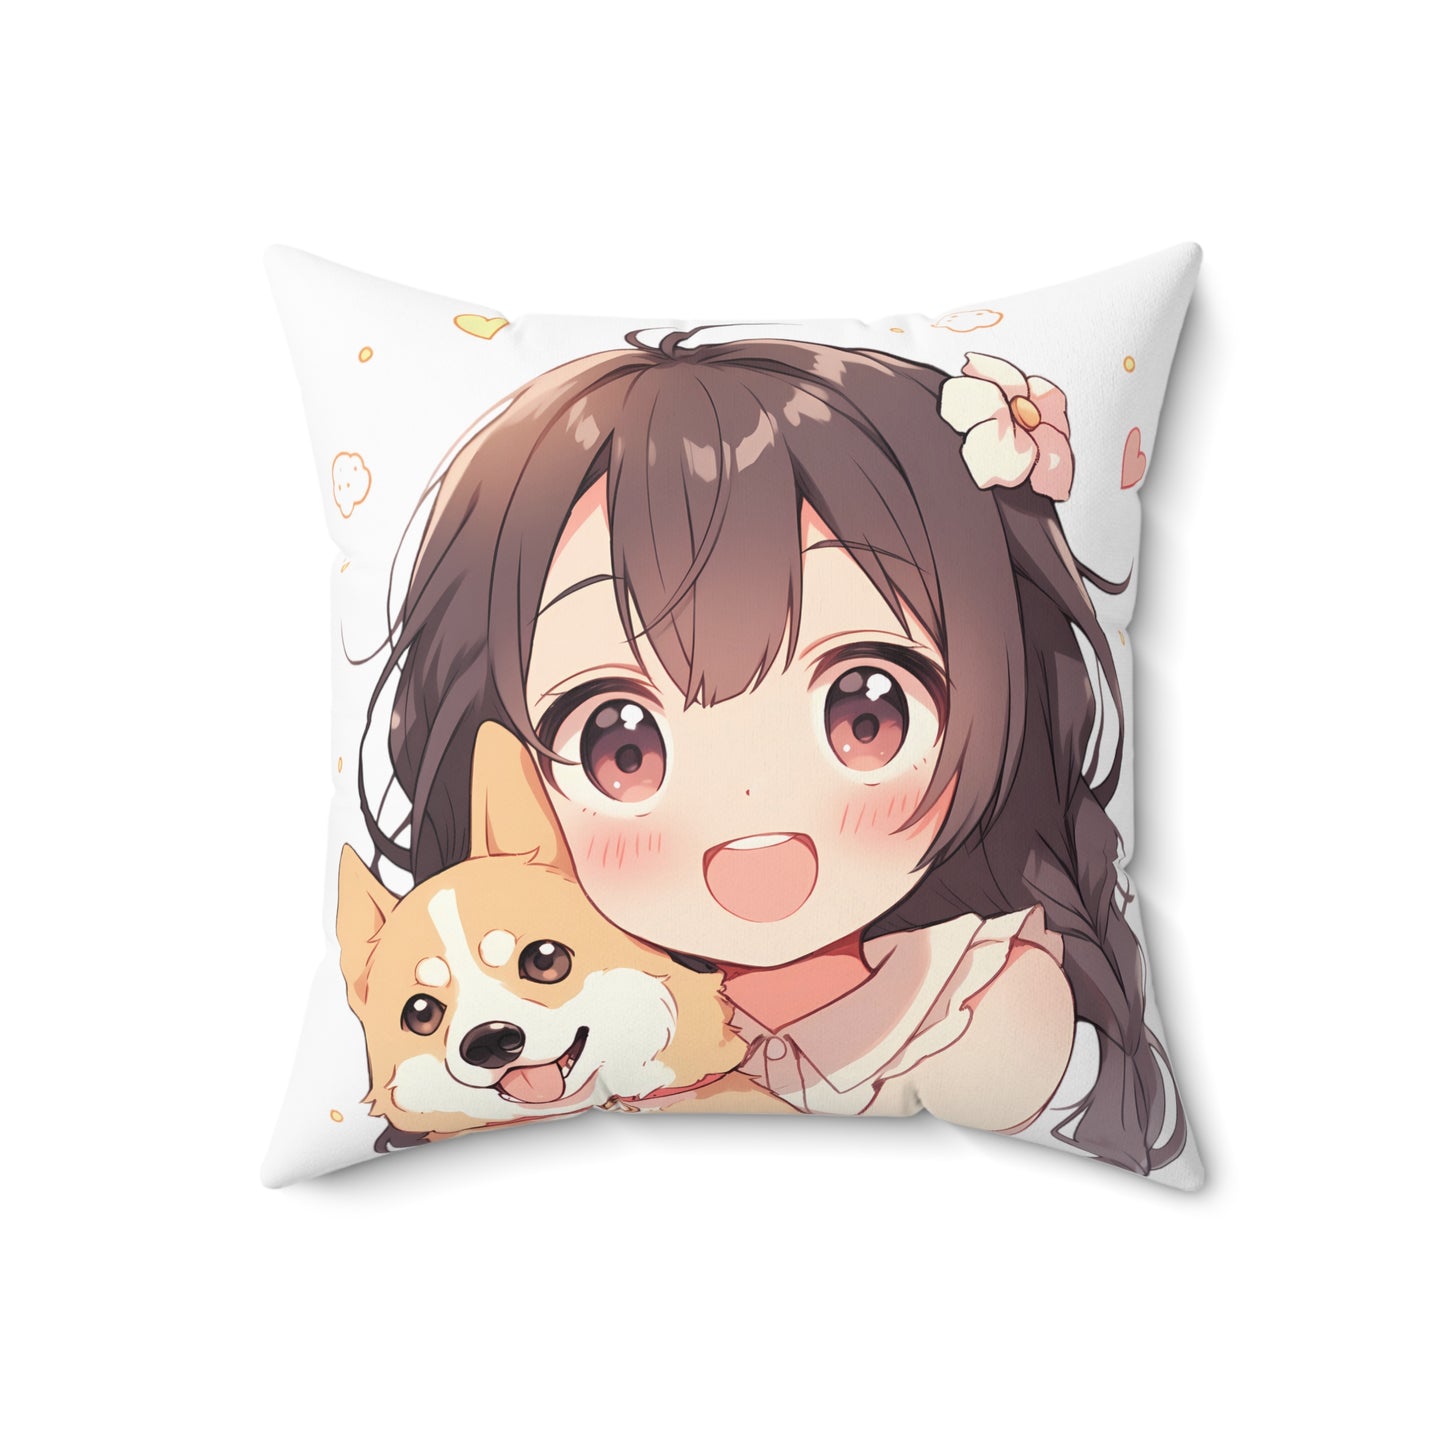 Soulmates - Cute Anime Throw Pillow